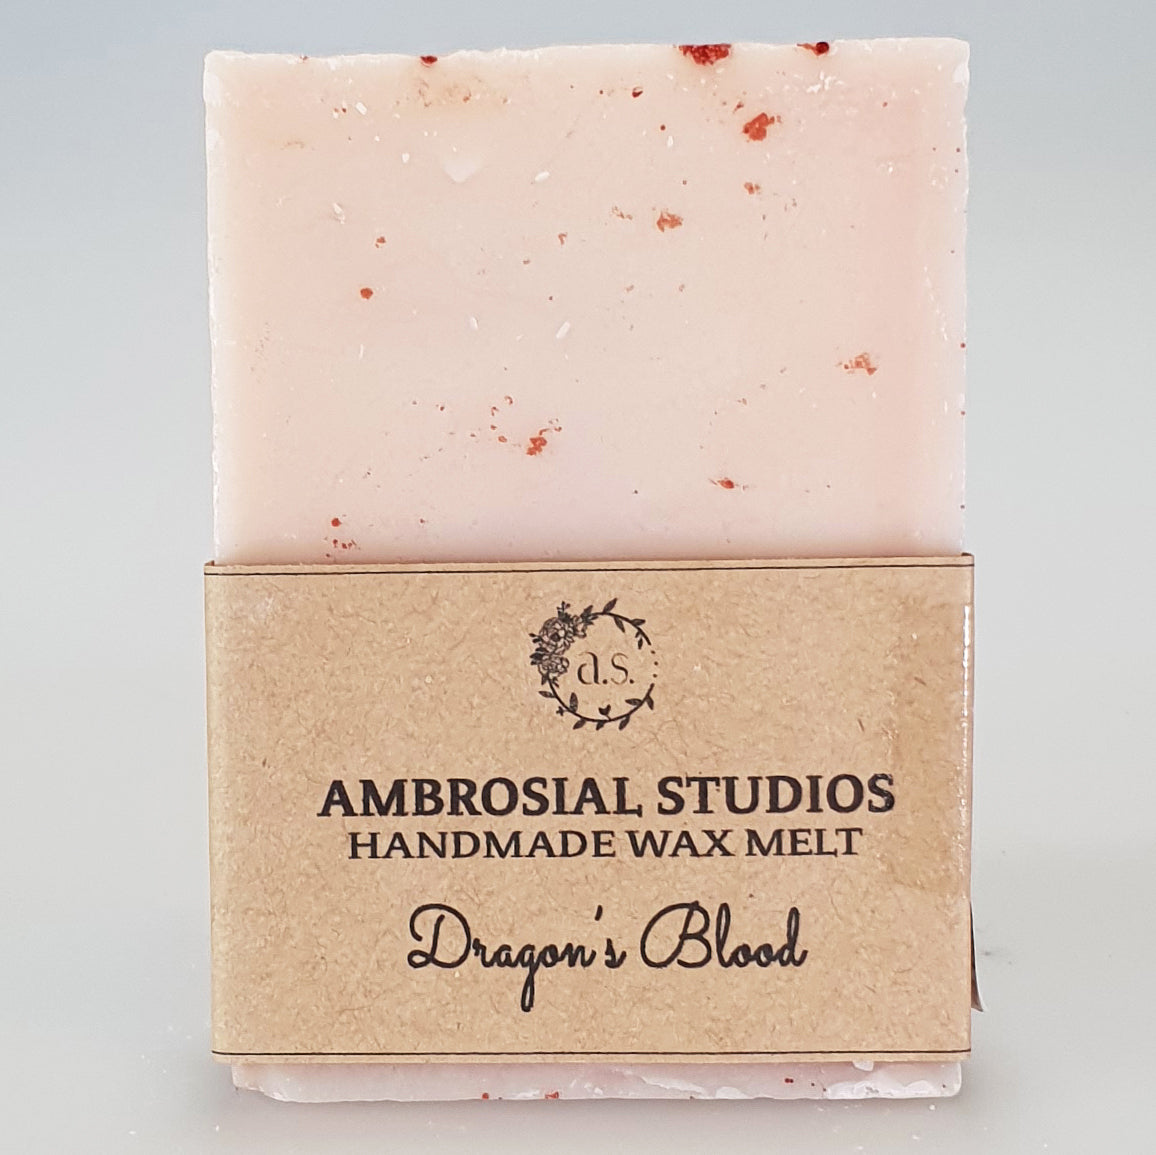 Ambrosial Studios - Handmade Wax Melt - Dragon's Blood